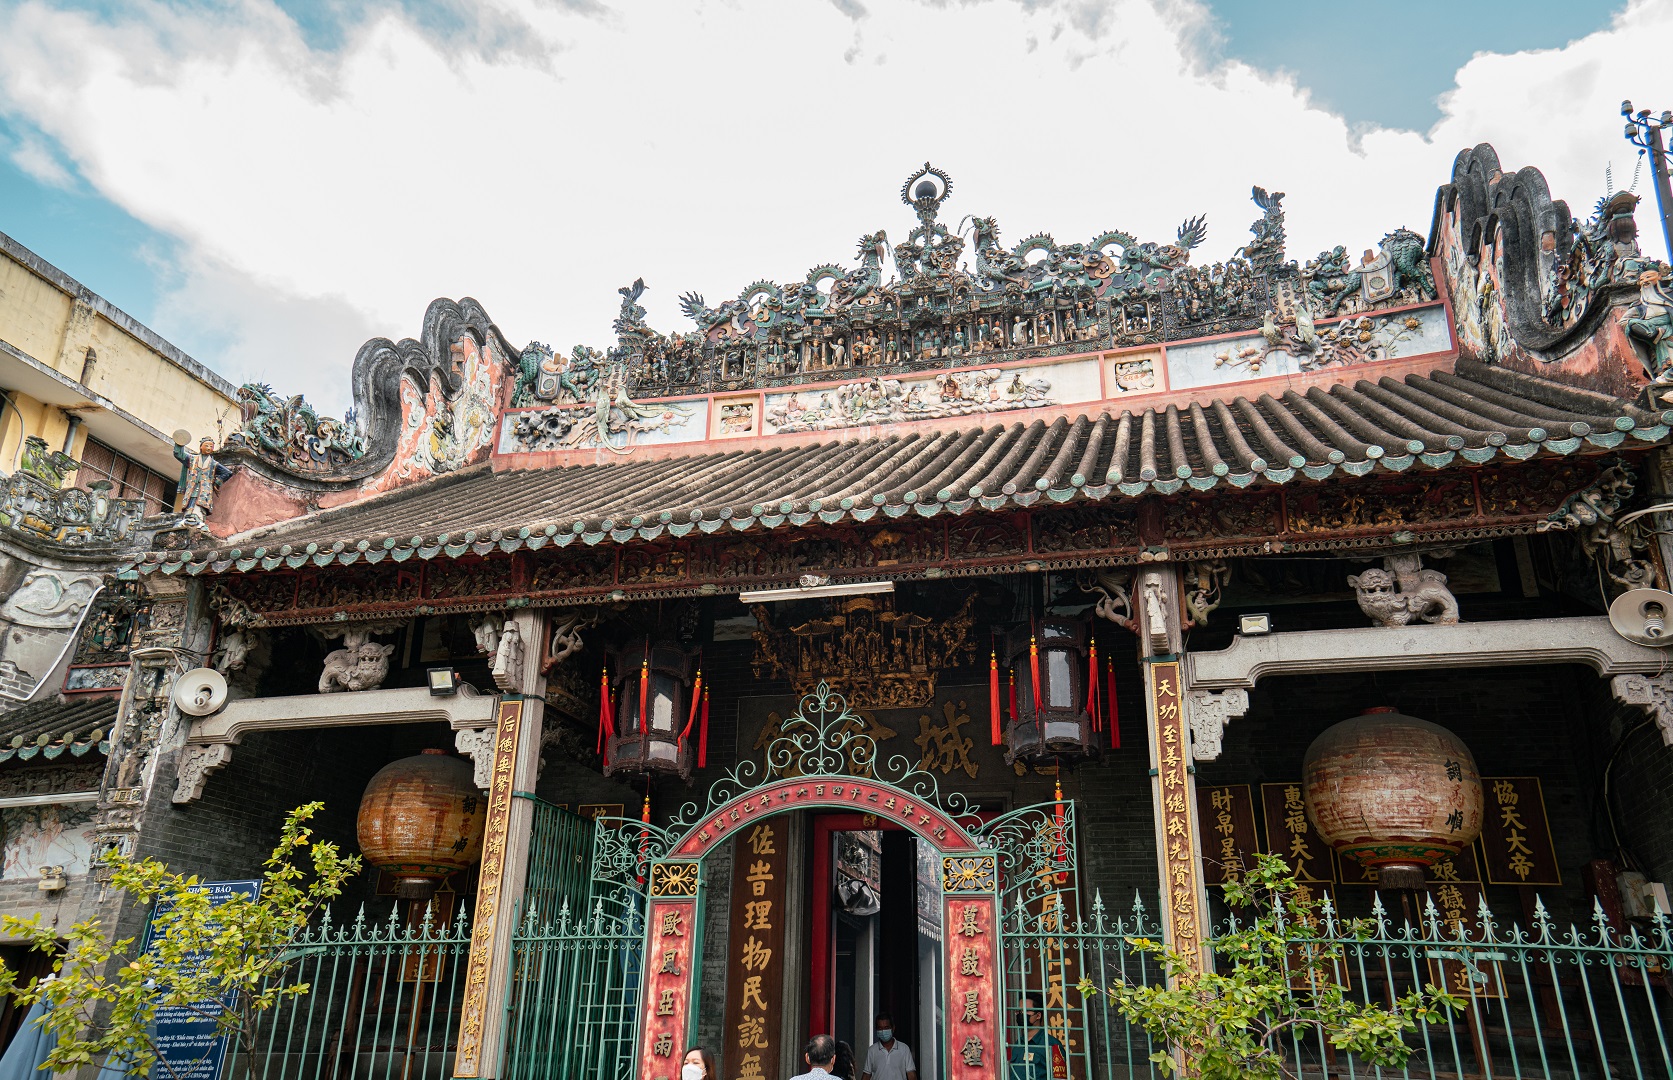 Ba Thien Hau Temple: A quiet spiritual destination in busy Ho Chi Minh City